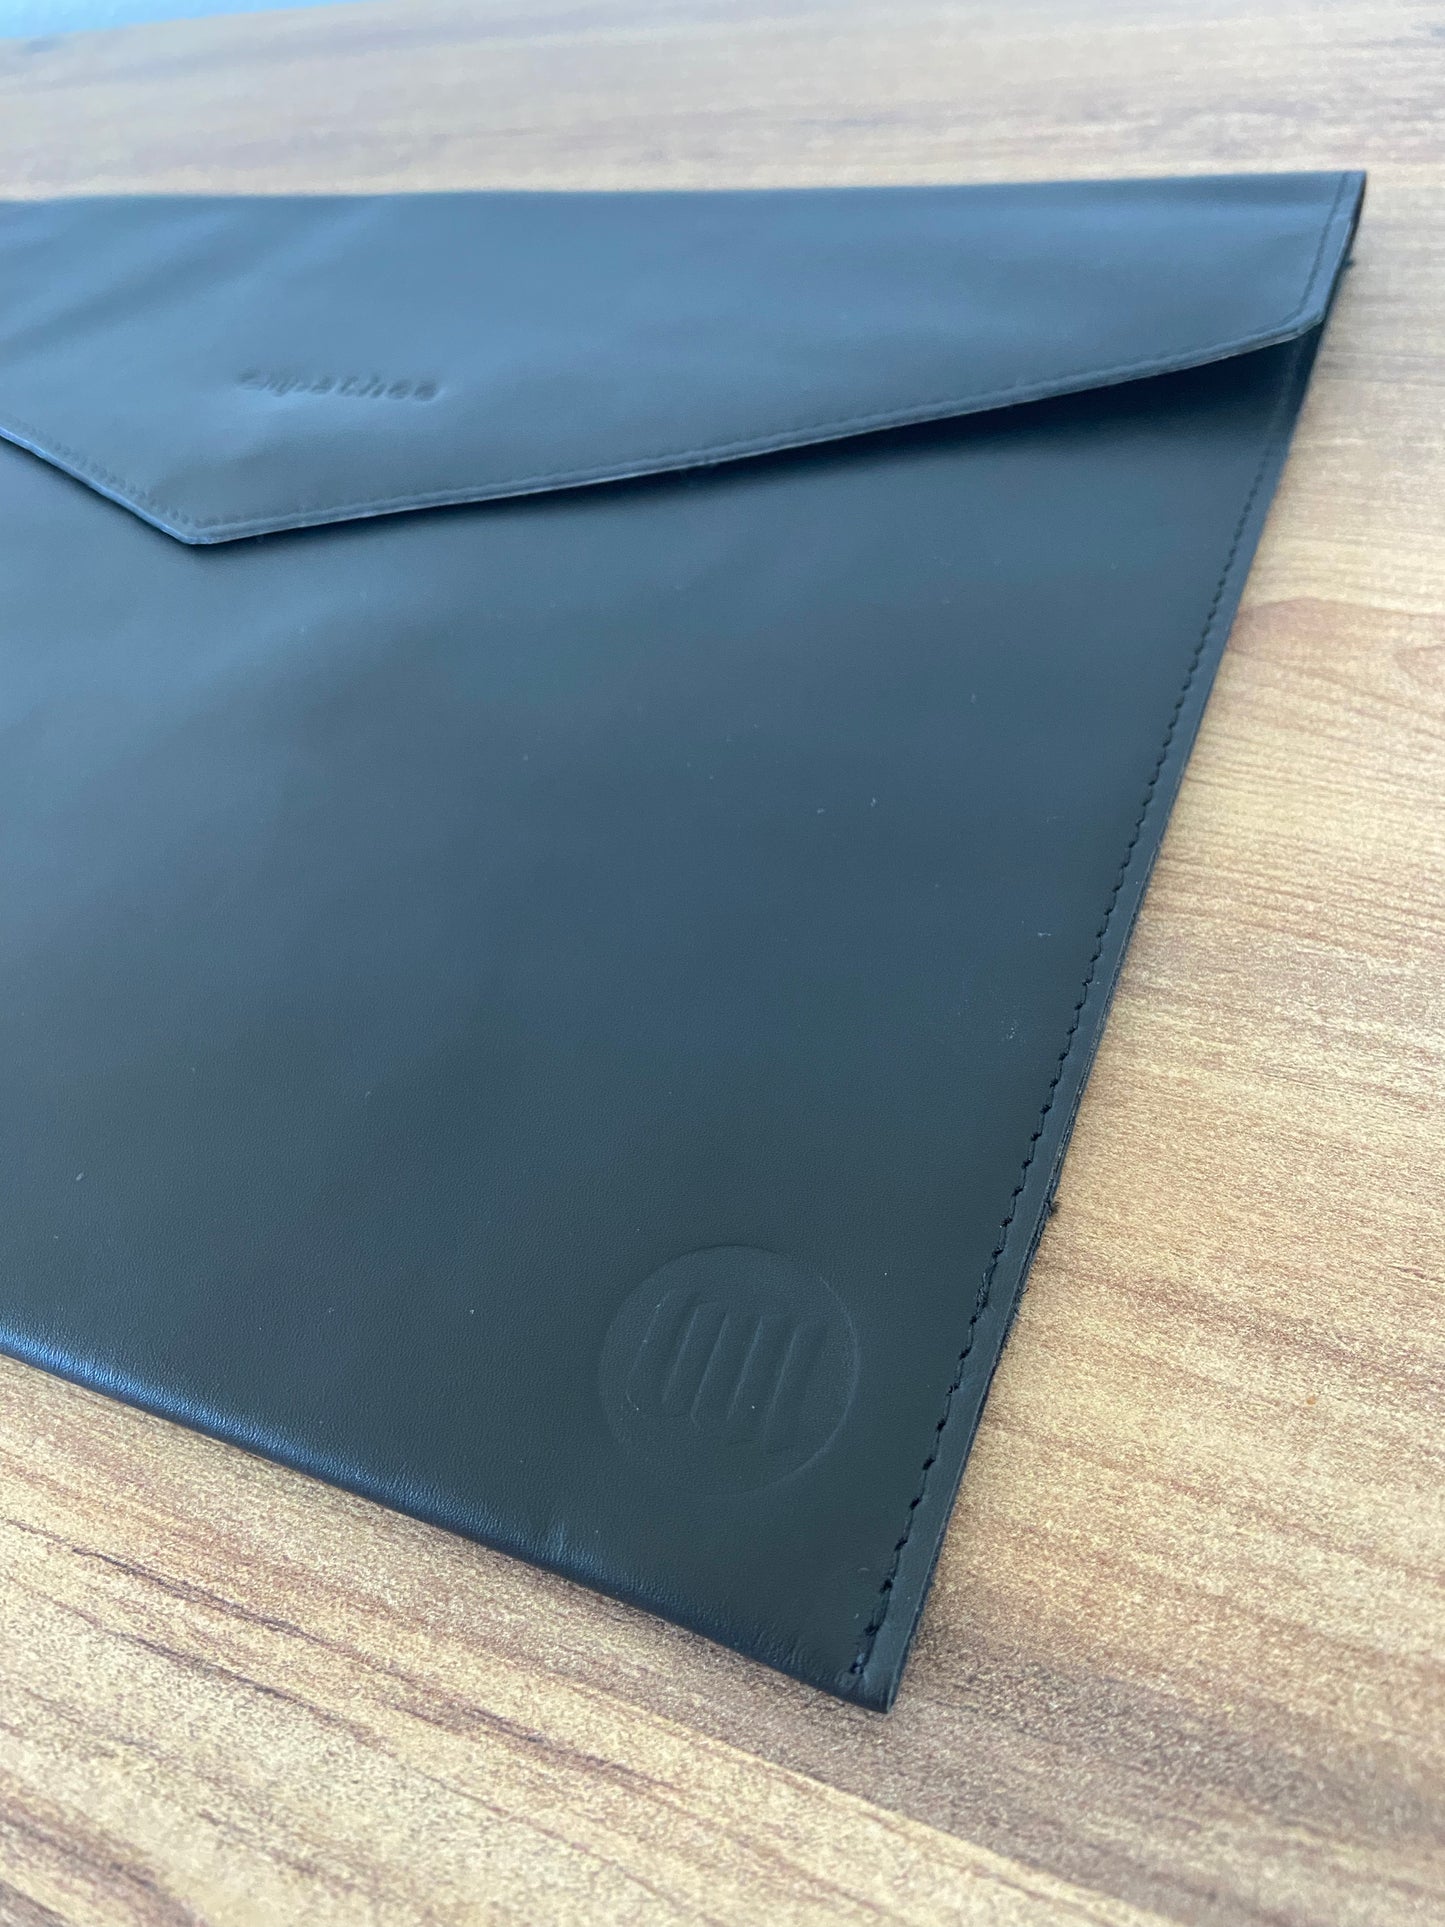 MacBook Pro / Air 13 (sleeve) leather laptop bags